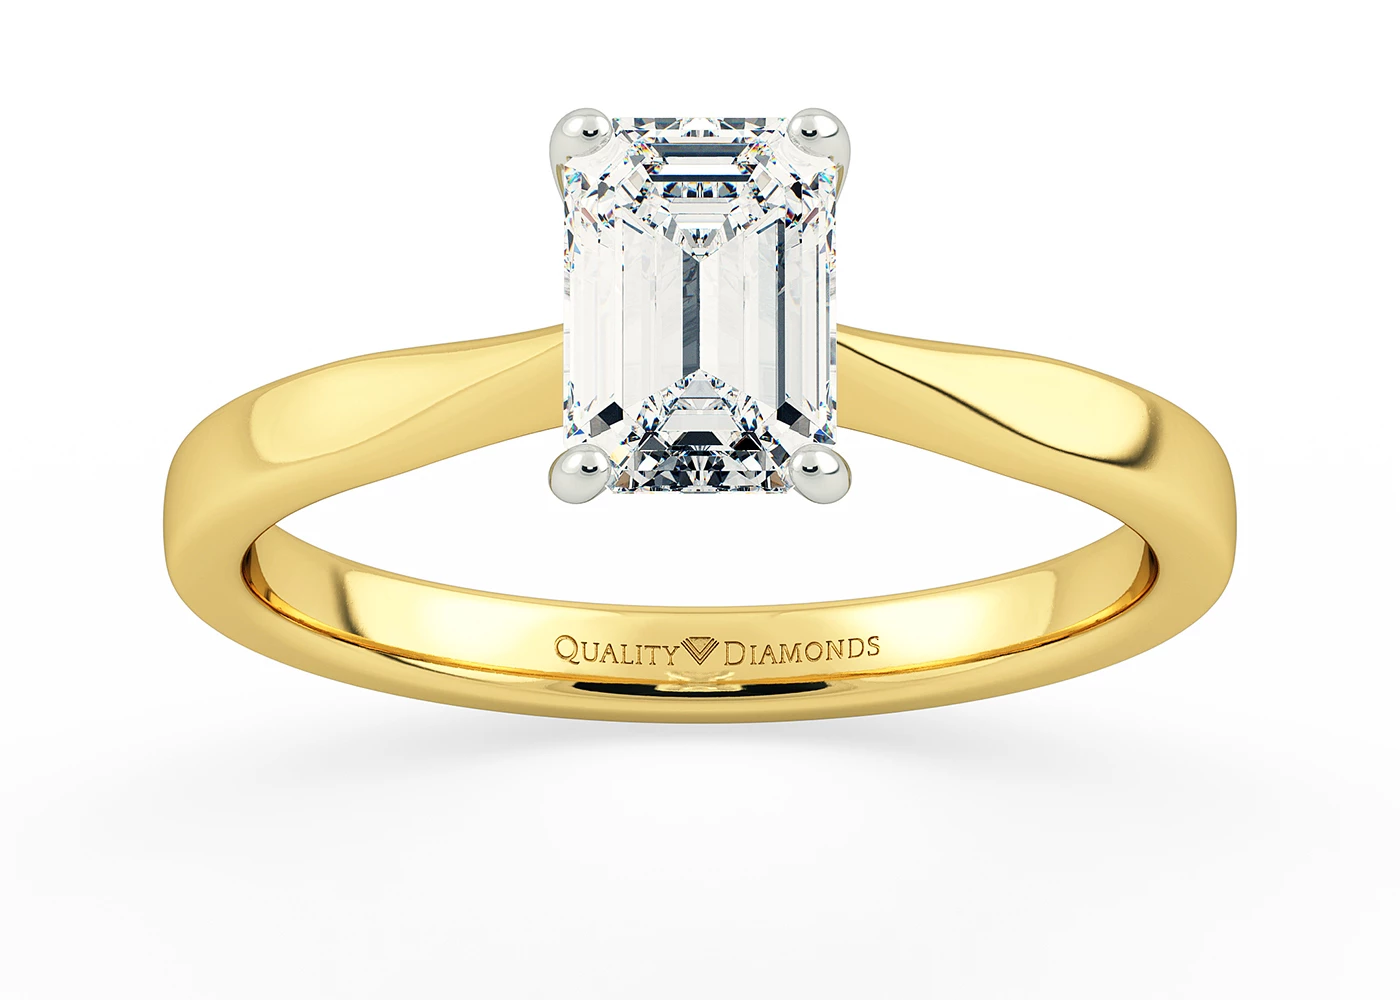 Emerald Beau Diamond Ring in 9K Yellow Gold